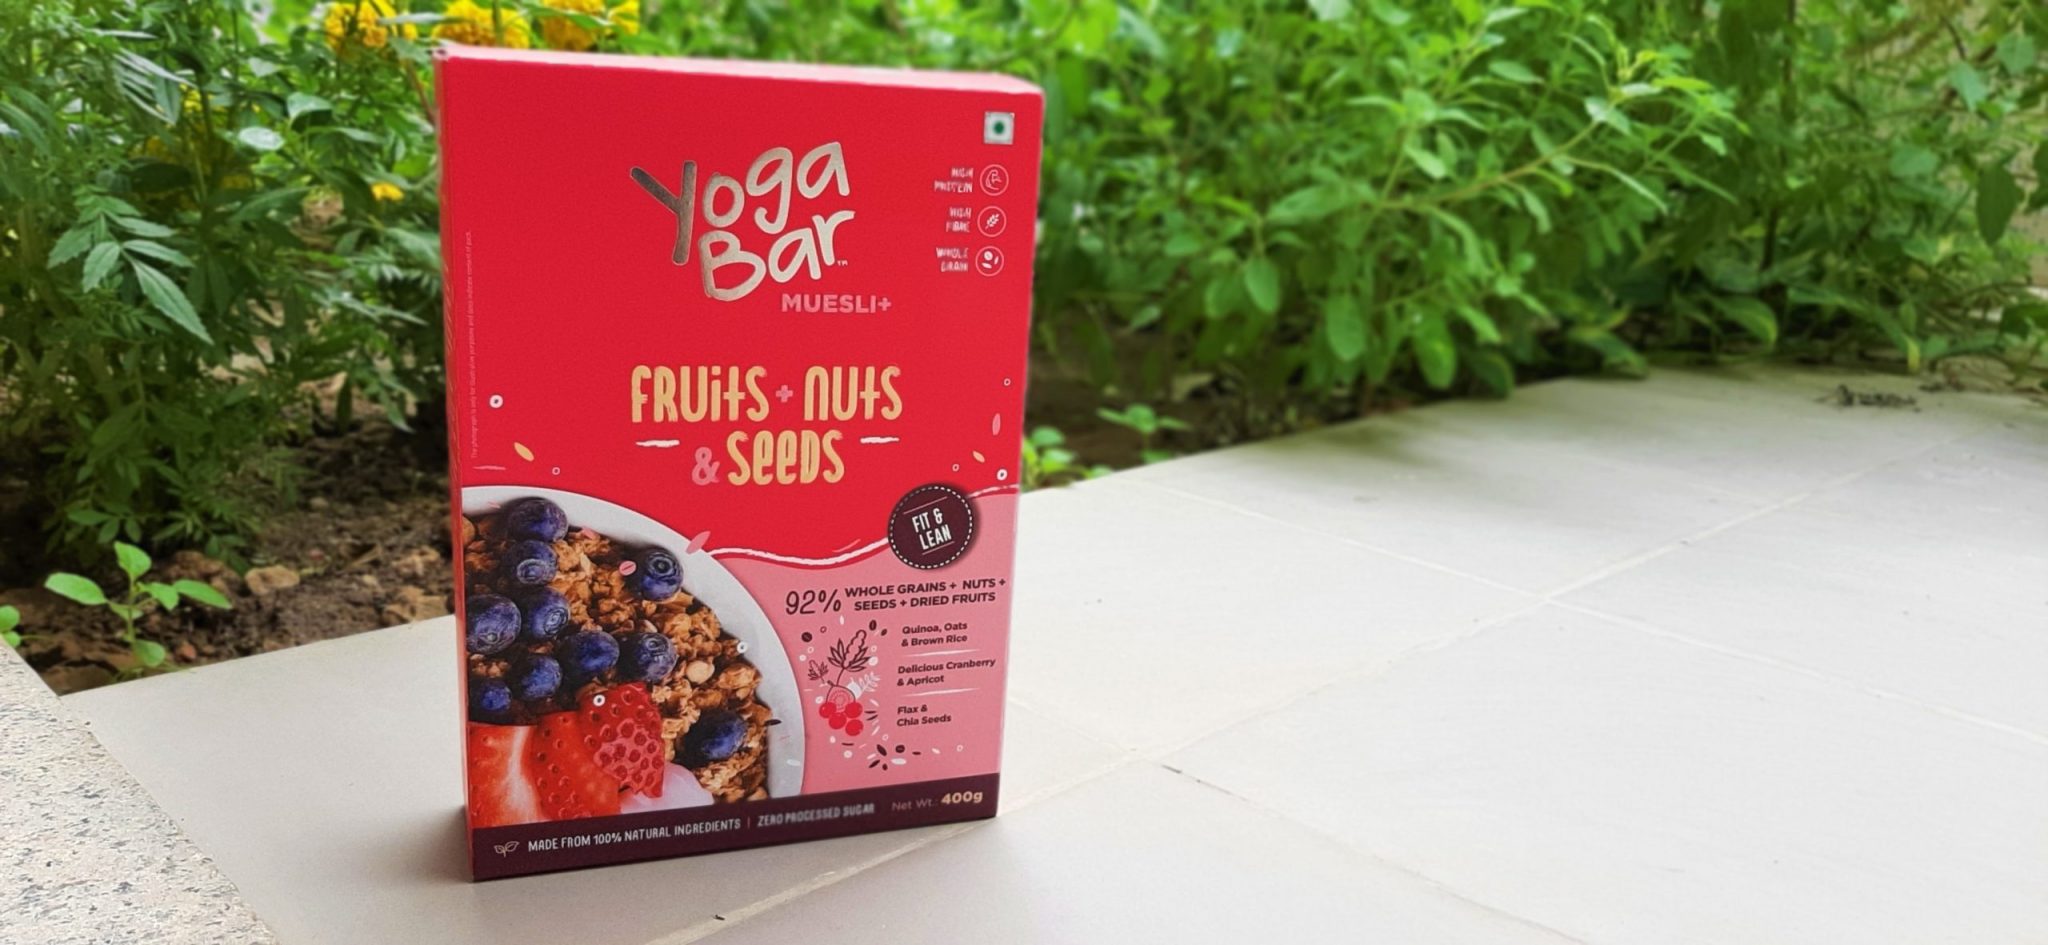 Yoga Bar Muesli - Fruits + Nuts & Seeds Review